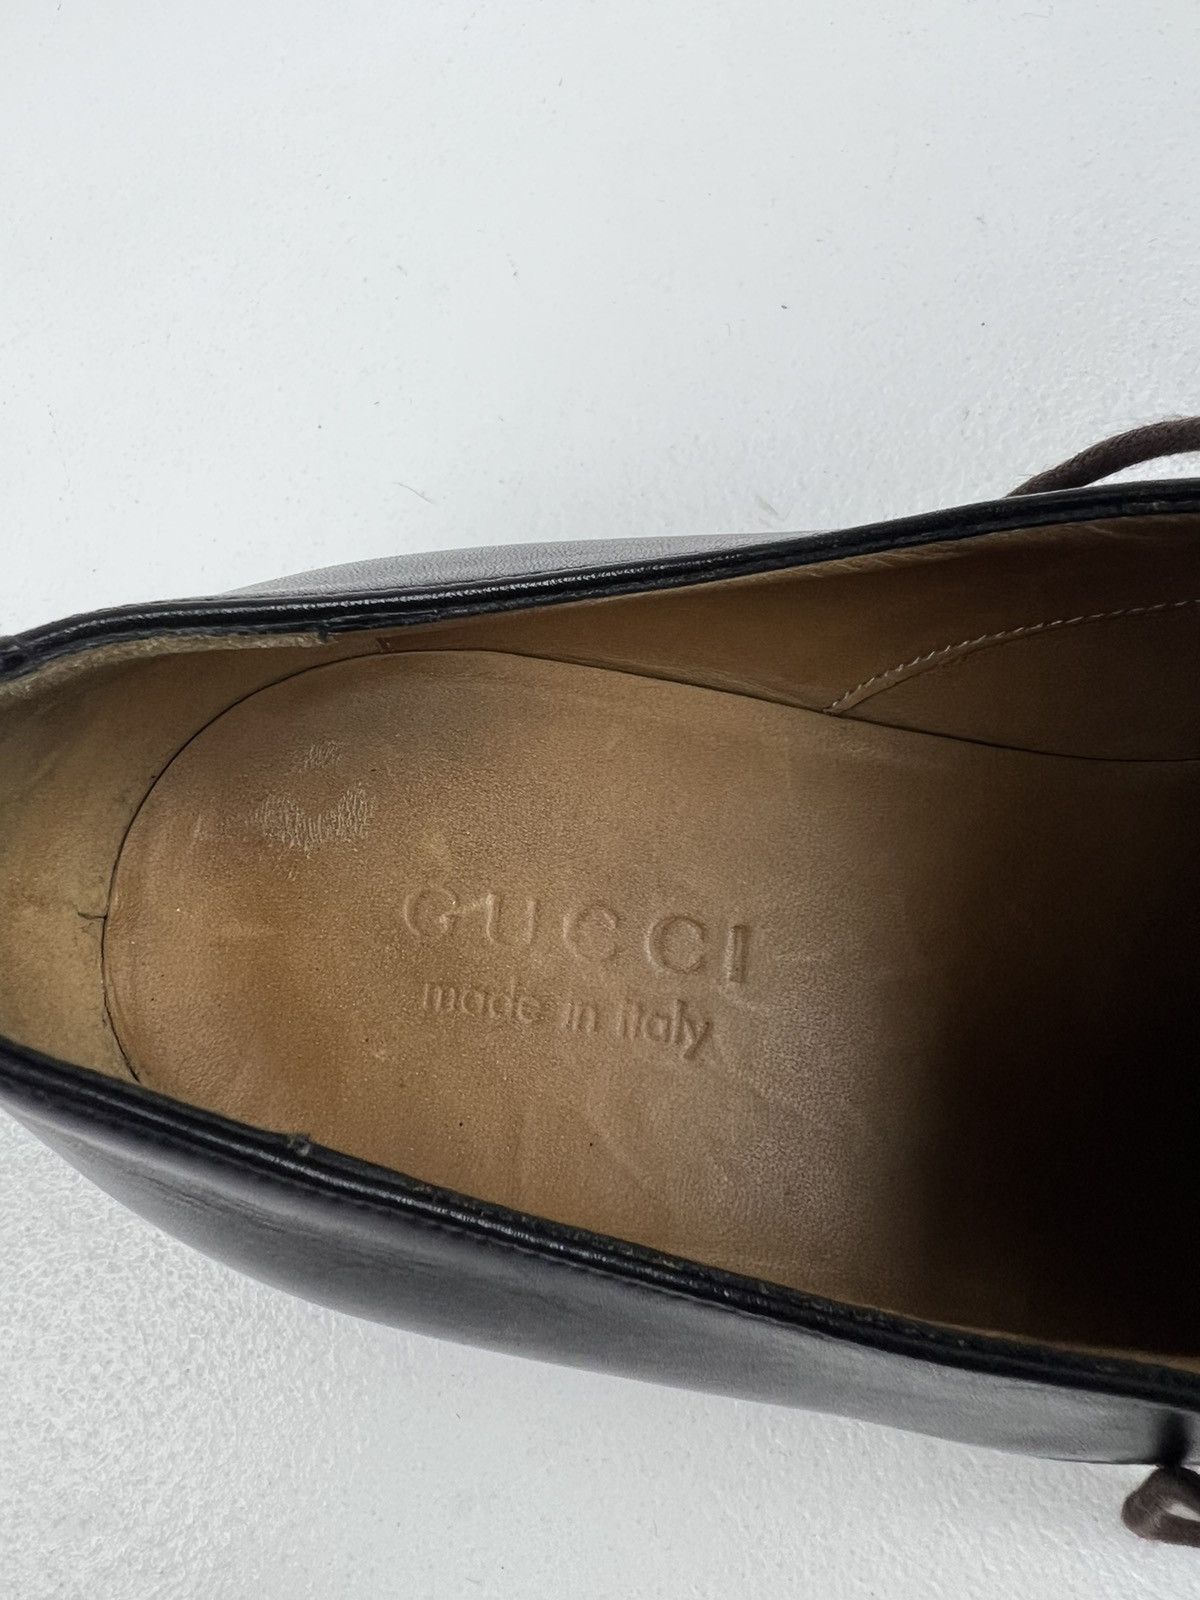 Gucci Gucci Logo Lace Up Leather Shoes Derby Size US 11.5 / EU 44-45 - 19 Thumbnail